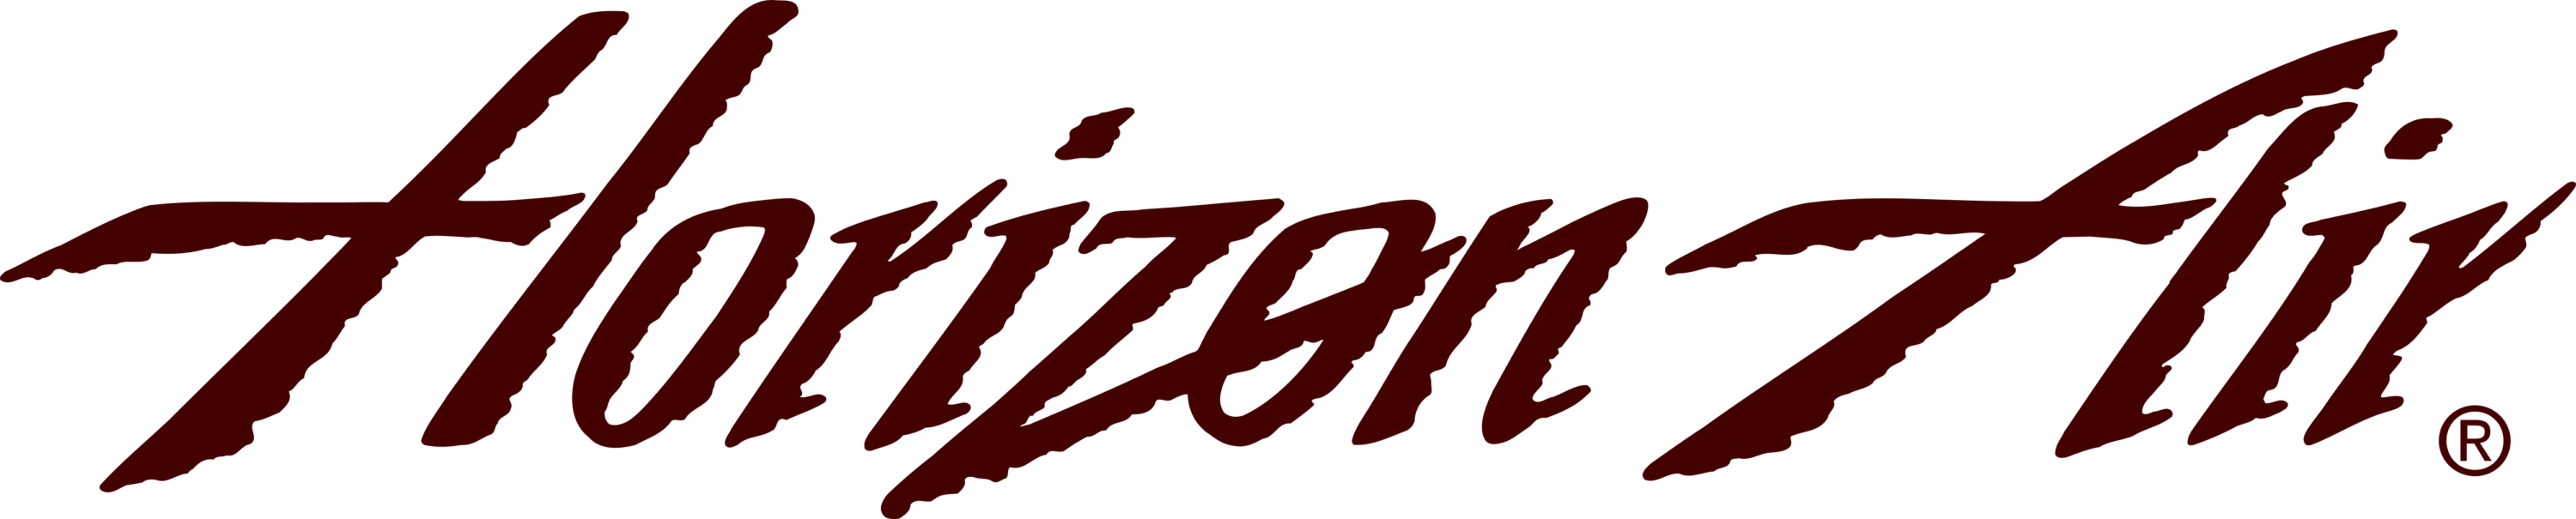 Horizon Air Logo